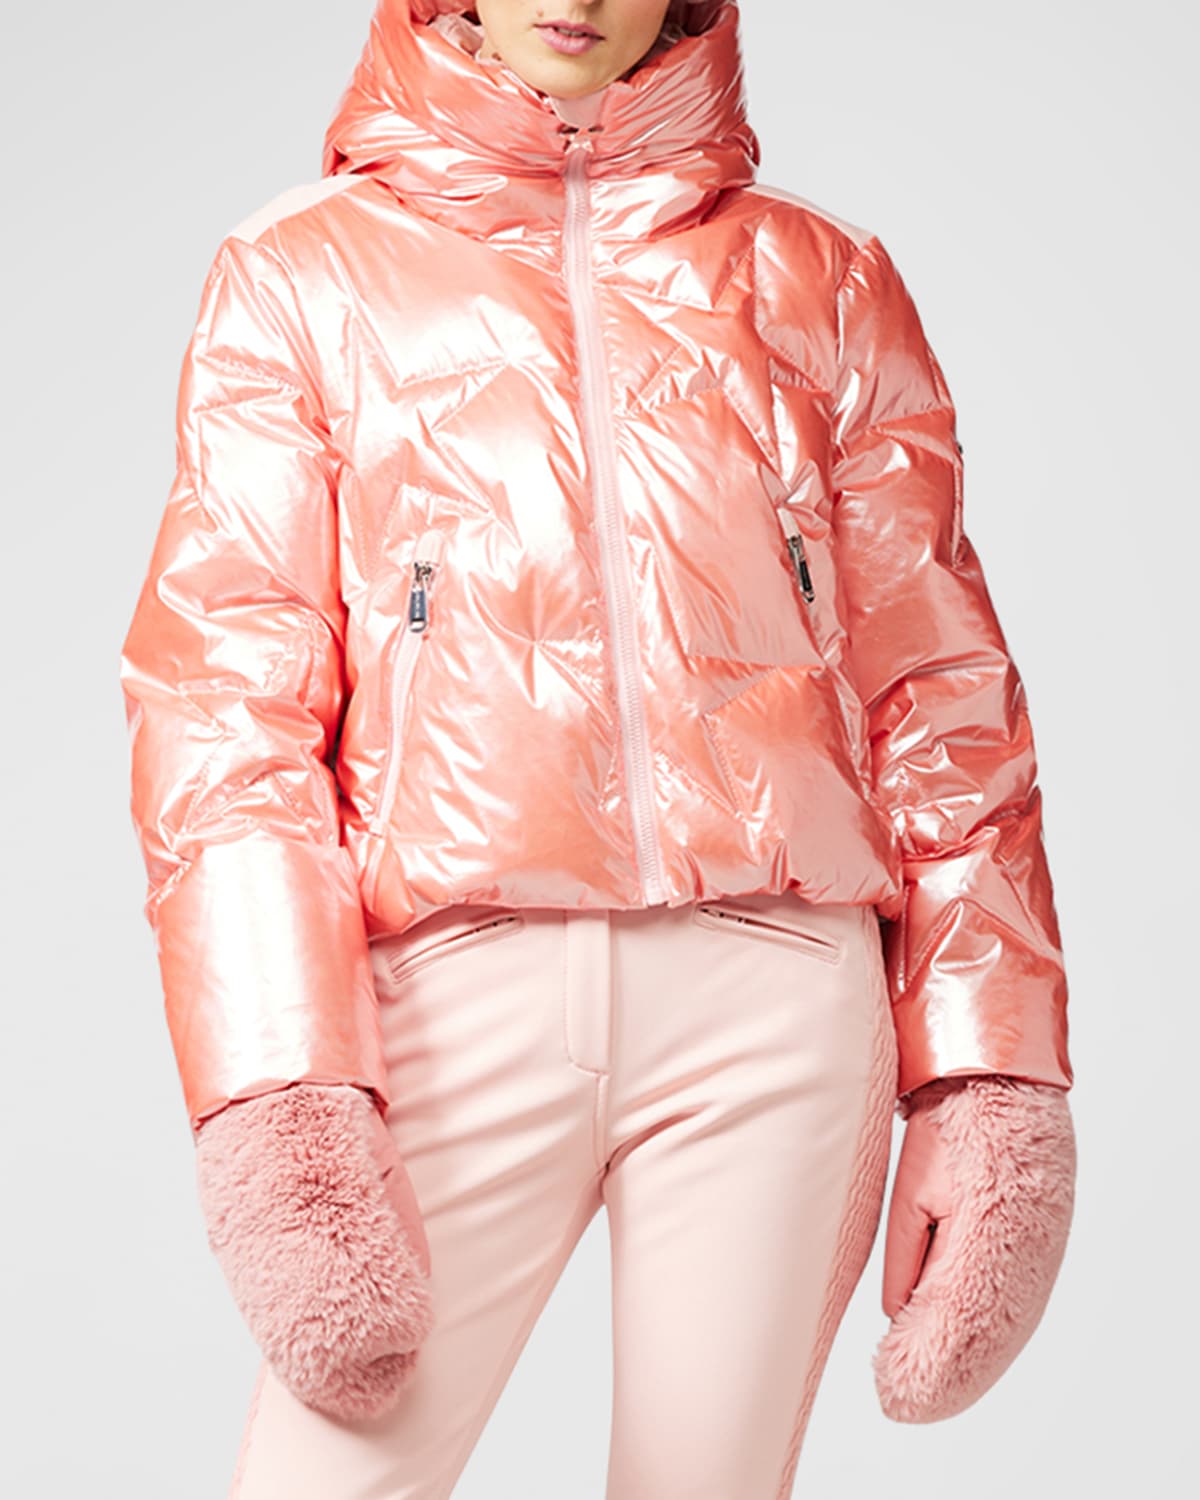 Glamstar Shiny Quilted Ski Jacket